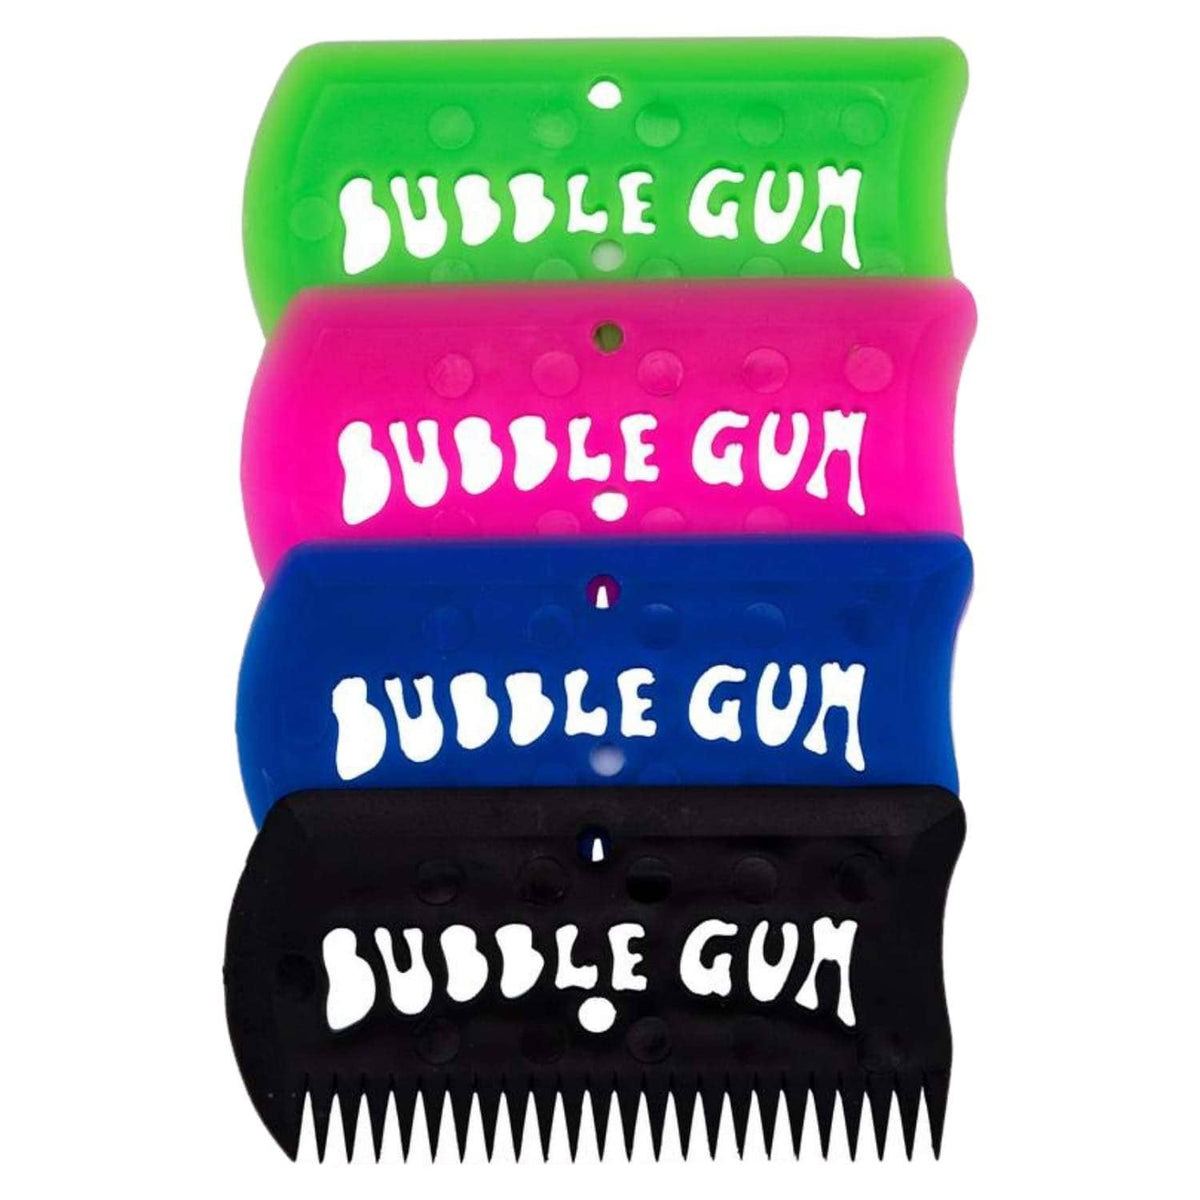 Bubble Gum Surfboard Wax Comb - Surf Wax Remover by Bubble Gum